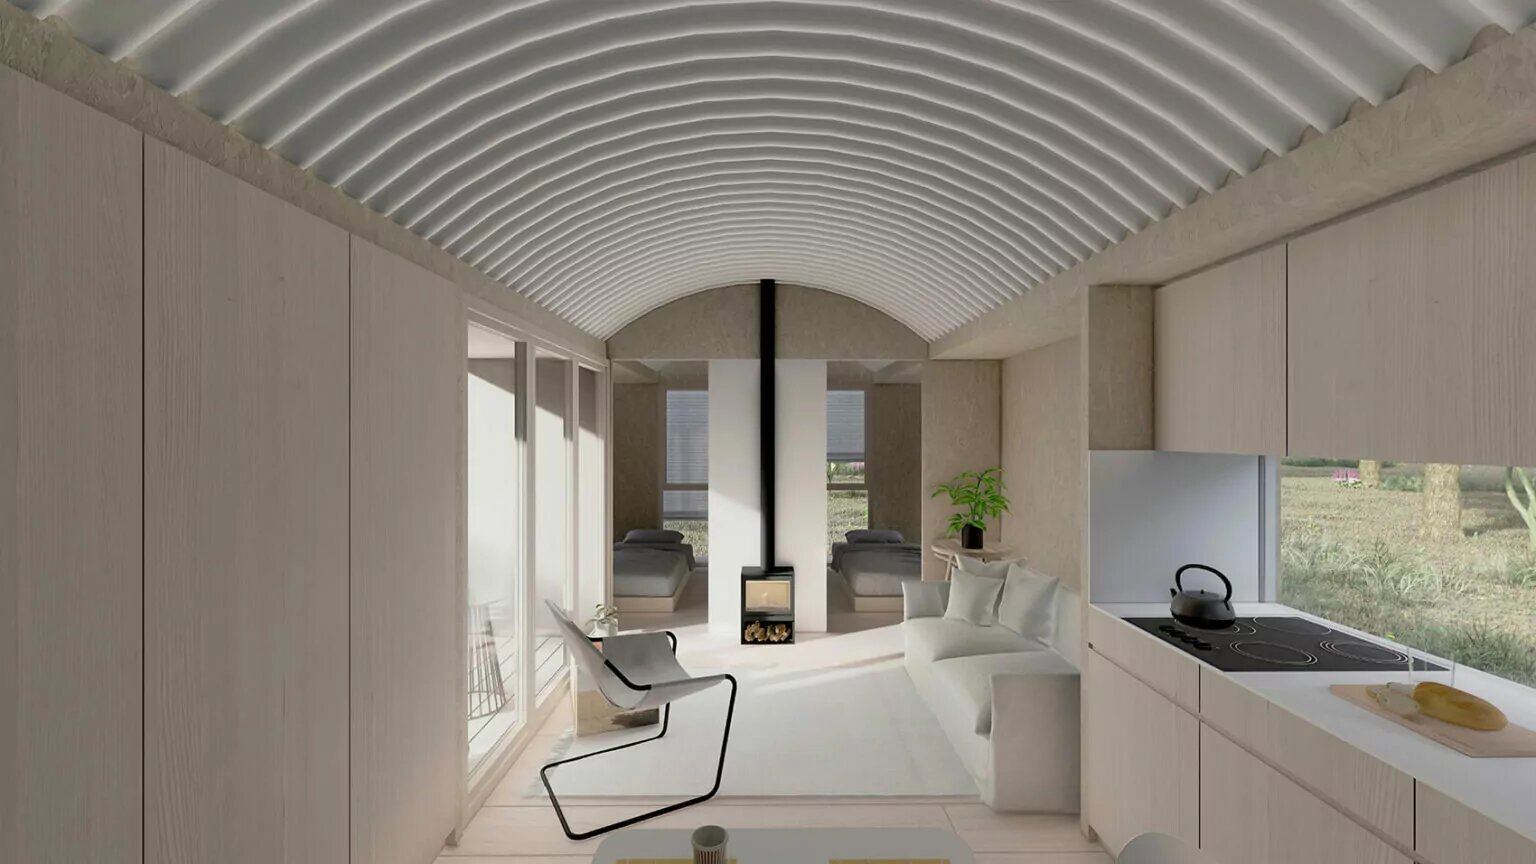 Interior de modelo de vivienda 'wahbi' en tonos claros.